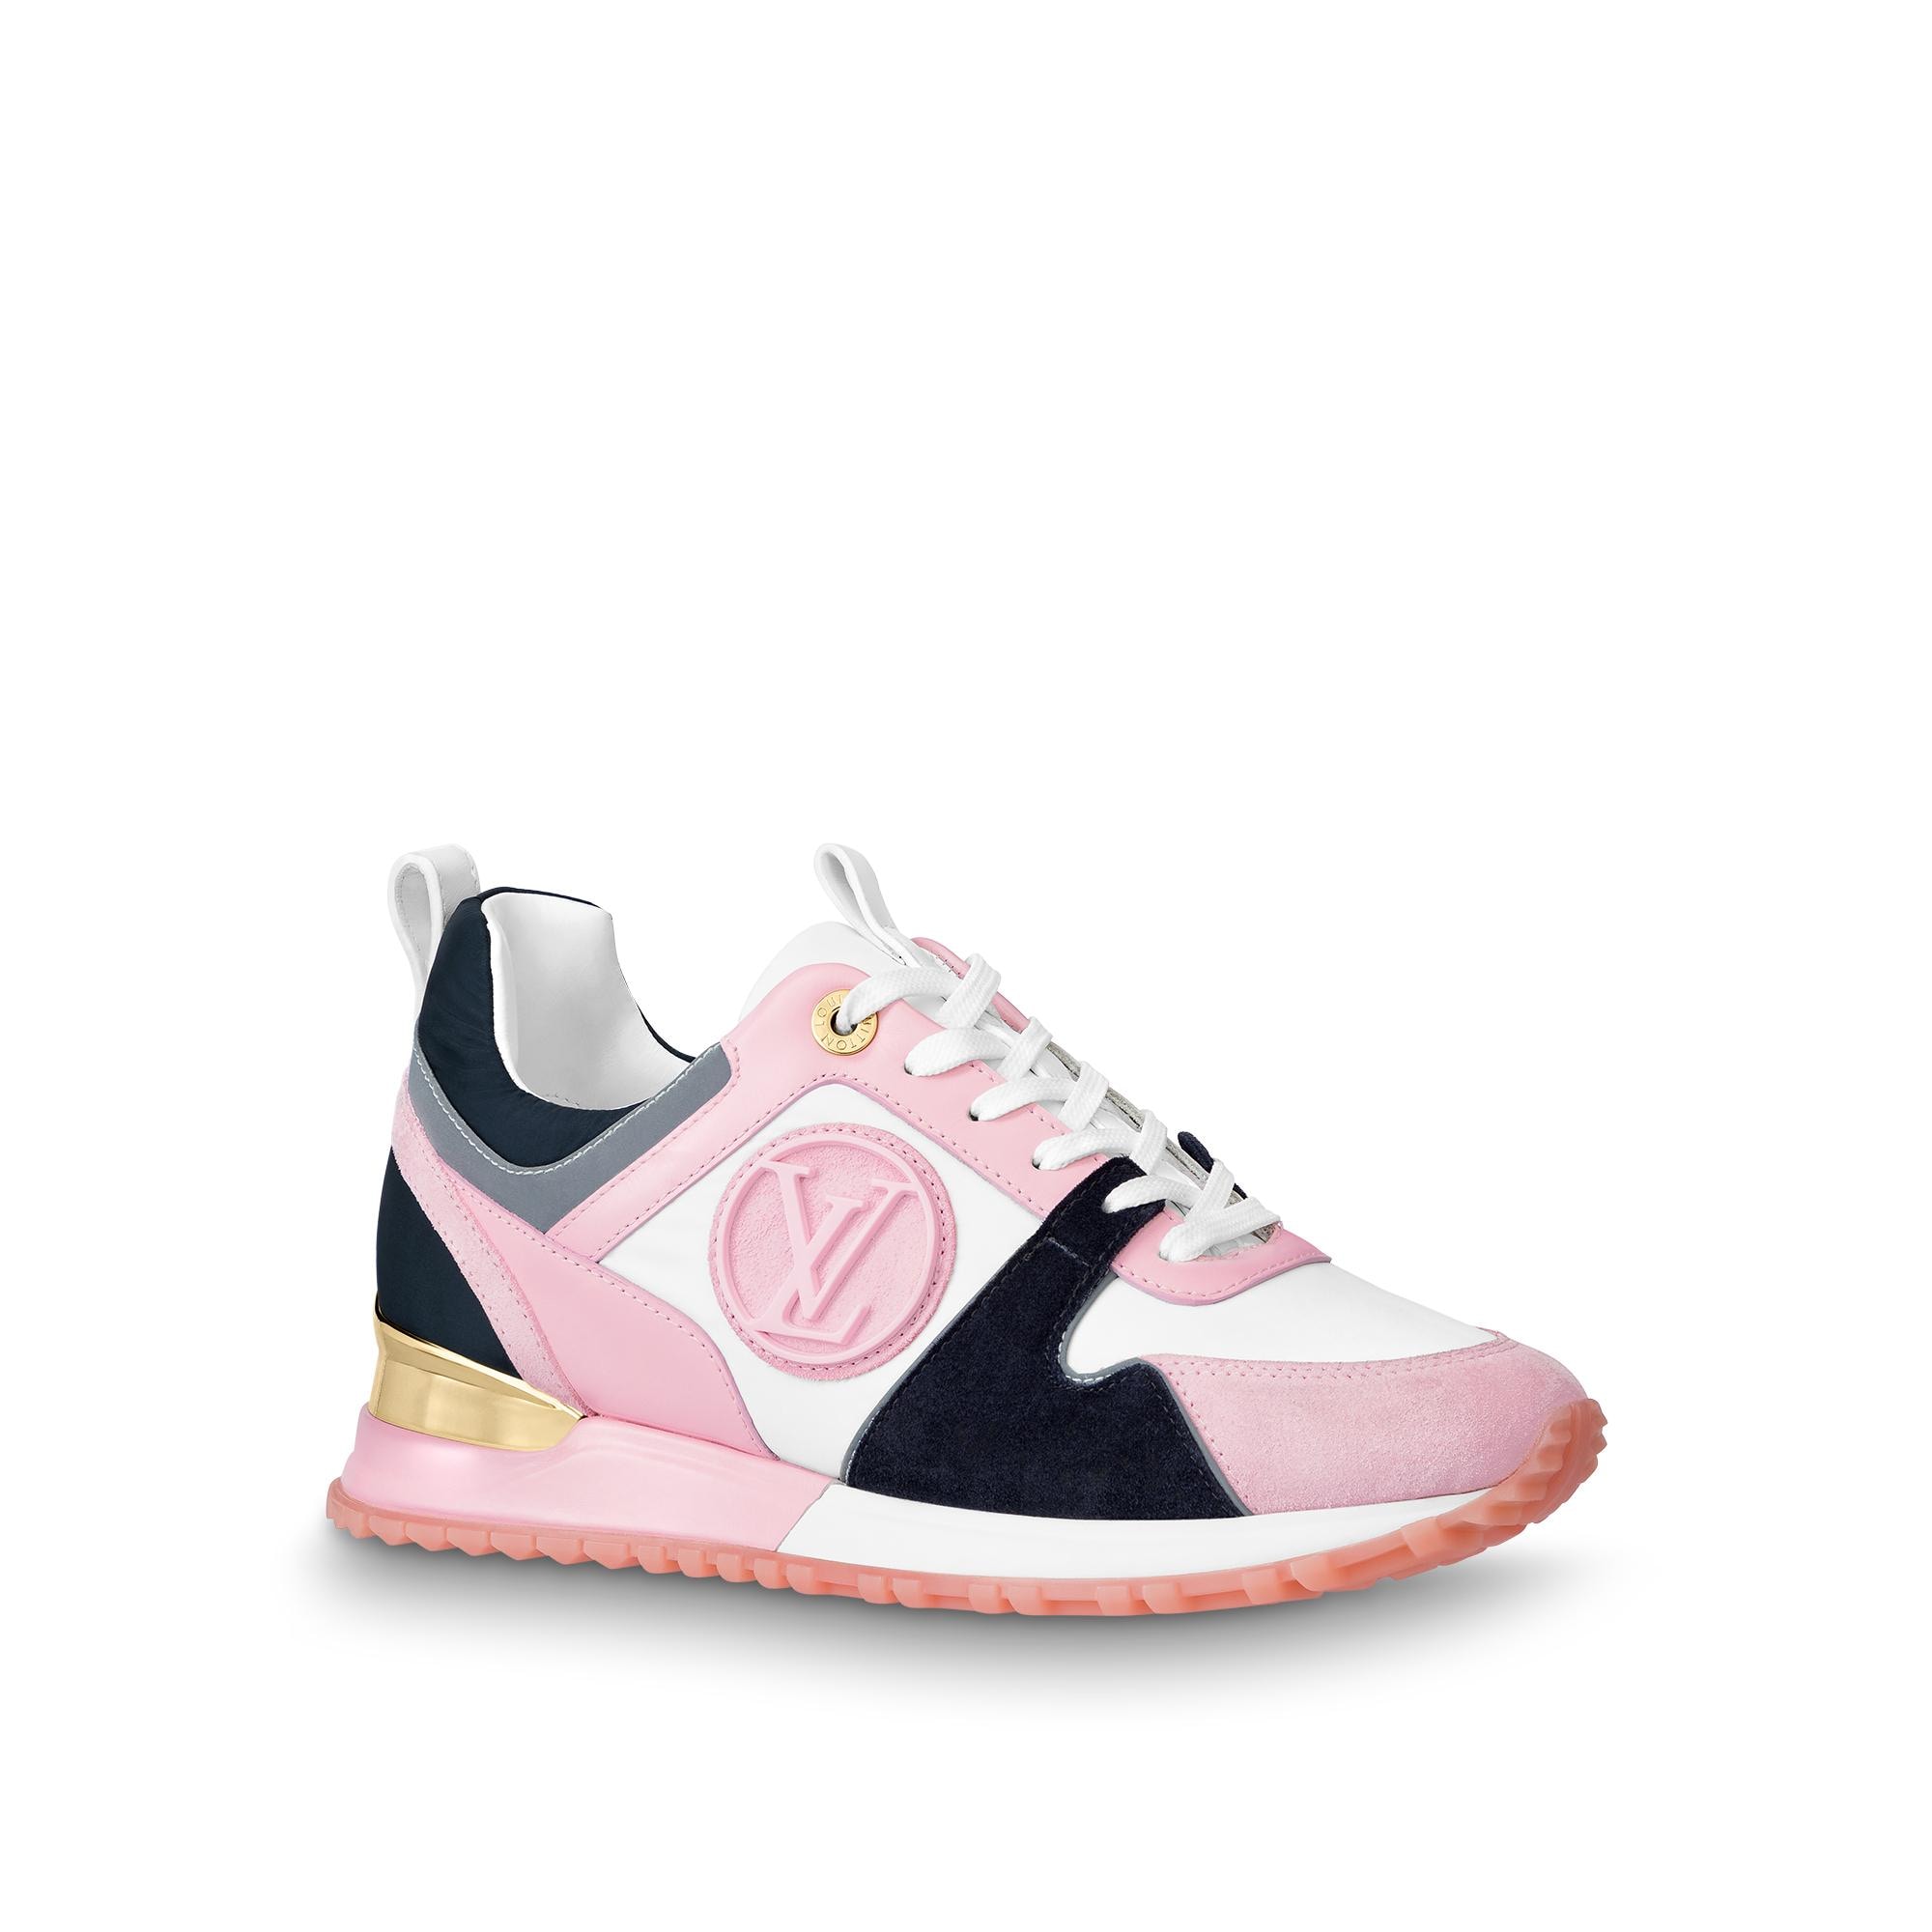 Run away trainers Louis Vuitton Pink size 35.5 EU in Suede - 32367414